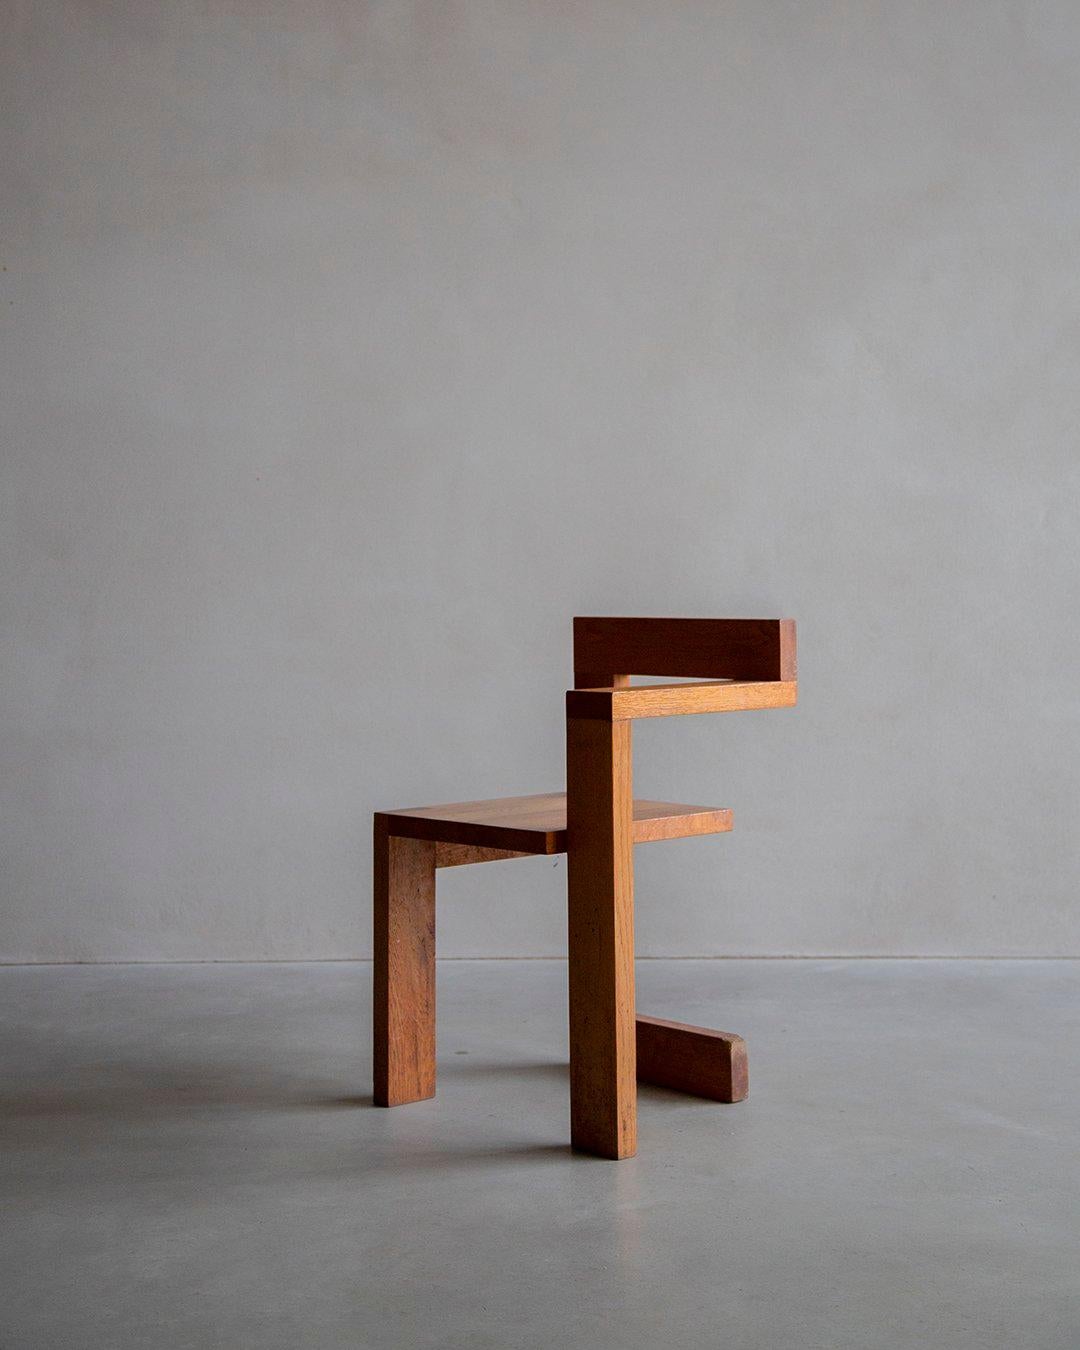 Hand-Carved Manner Of Gerrit Rietveld - Steltman Chair - 1970s Dutch interpretation For Sale